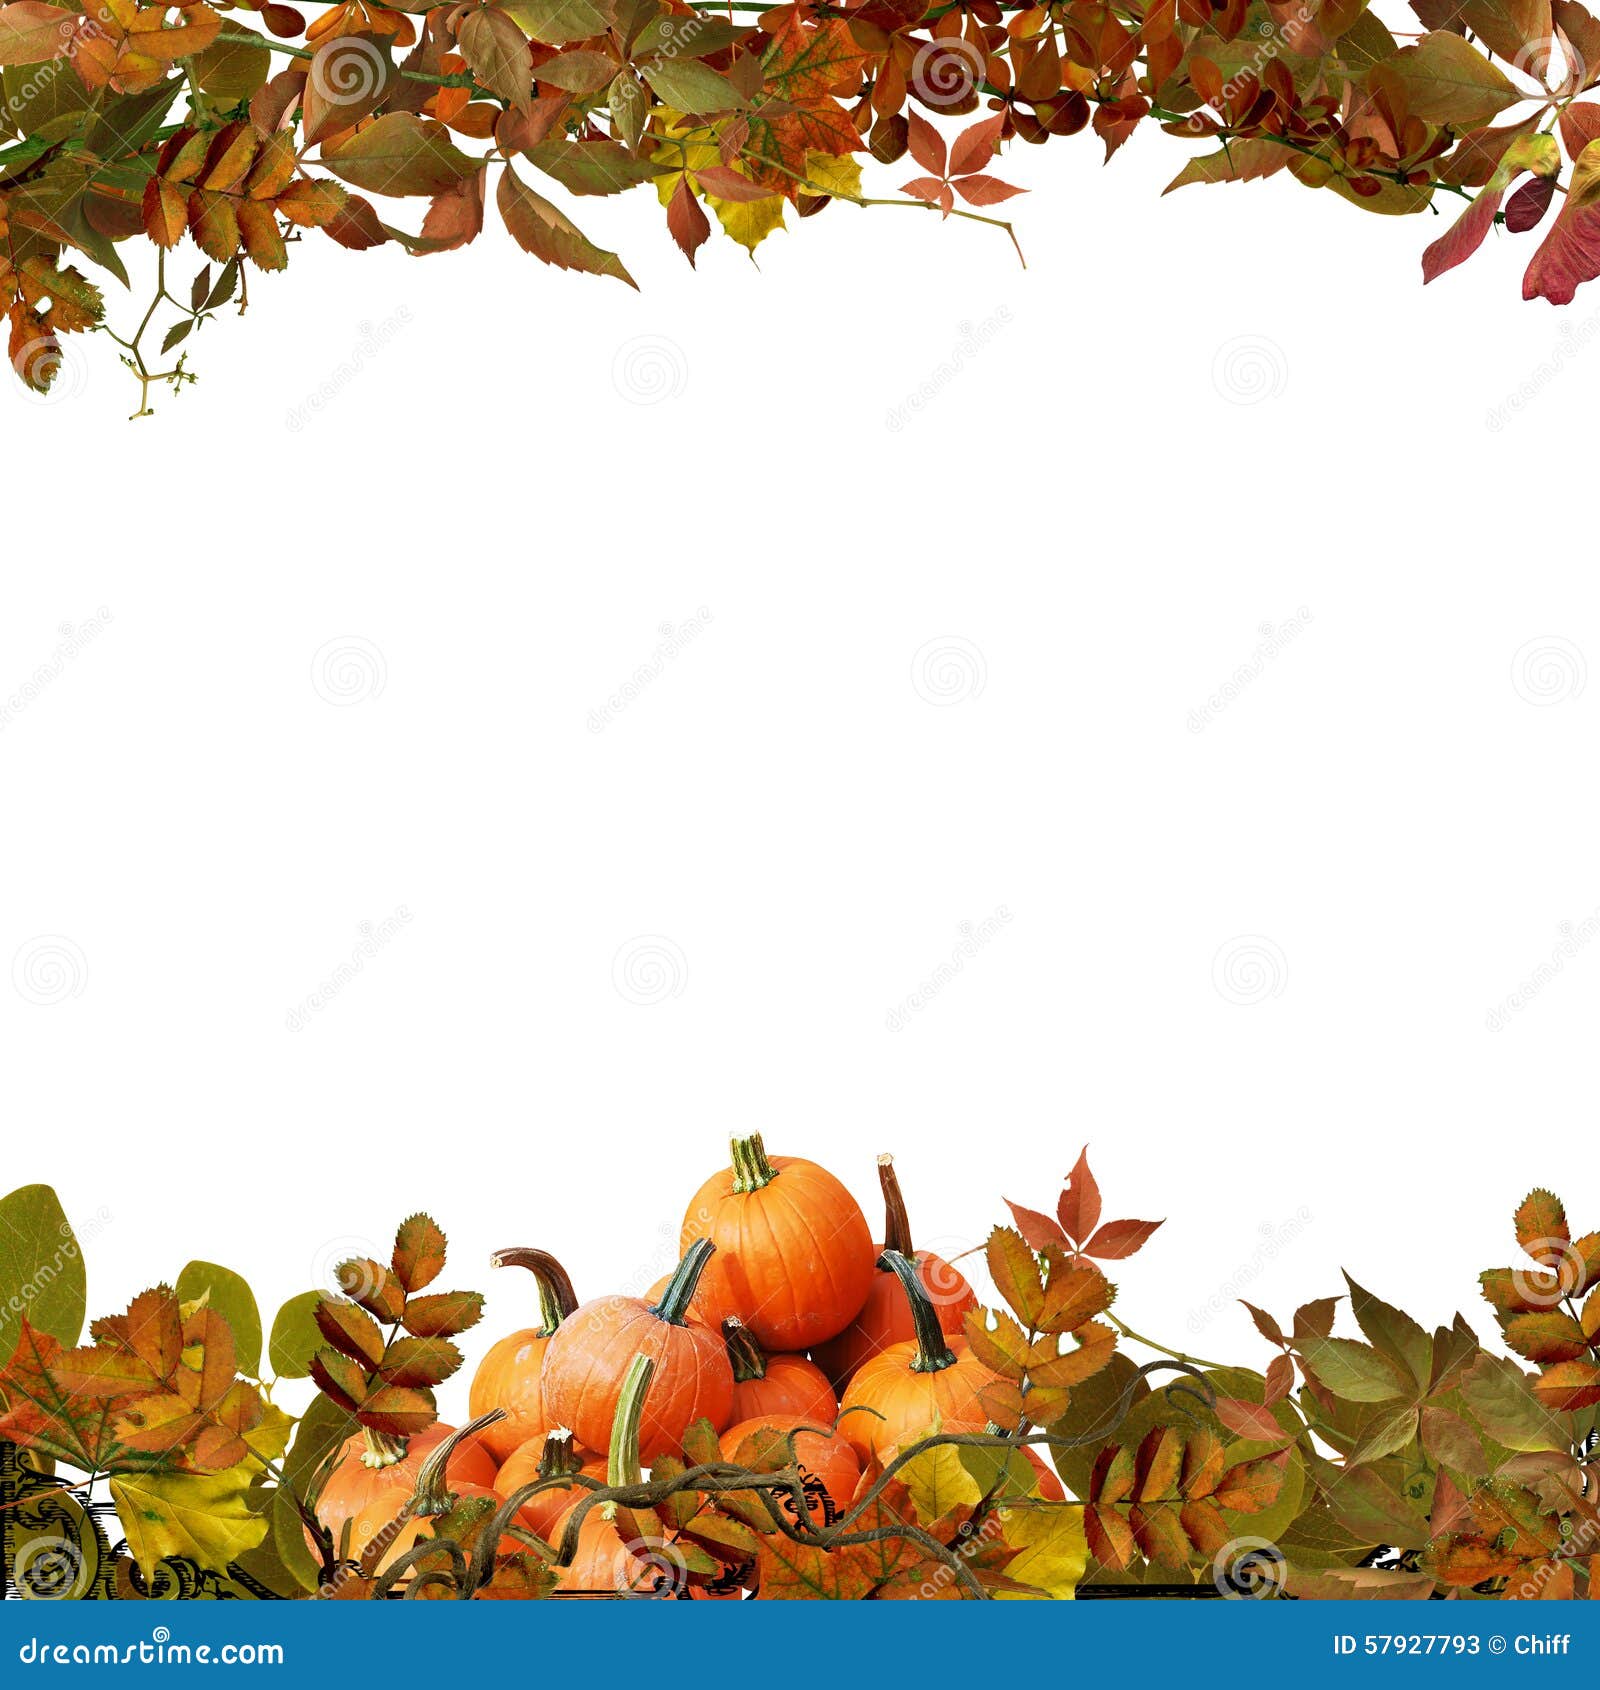 clip art fall leaves pumpkins - photo #50